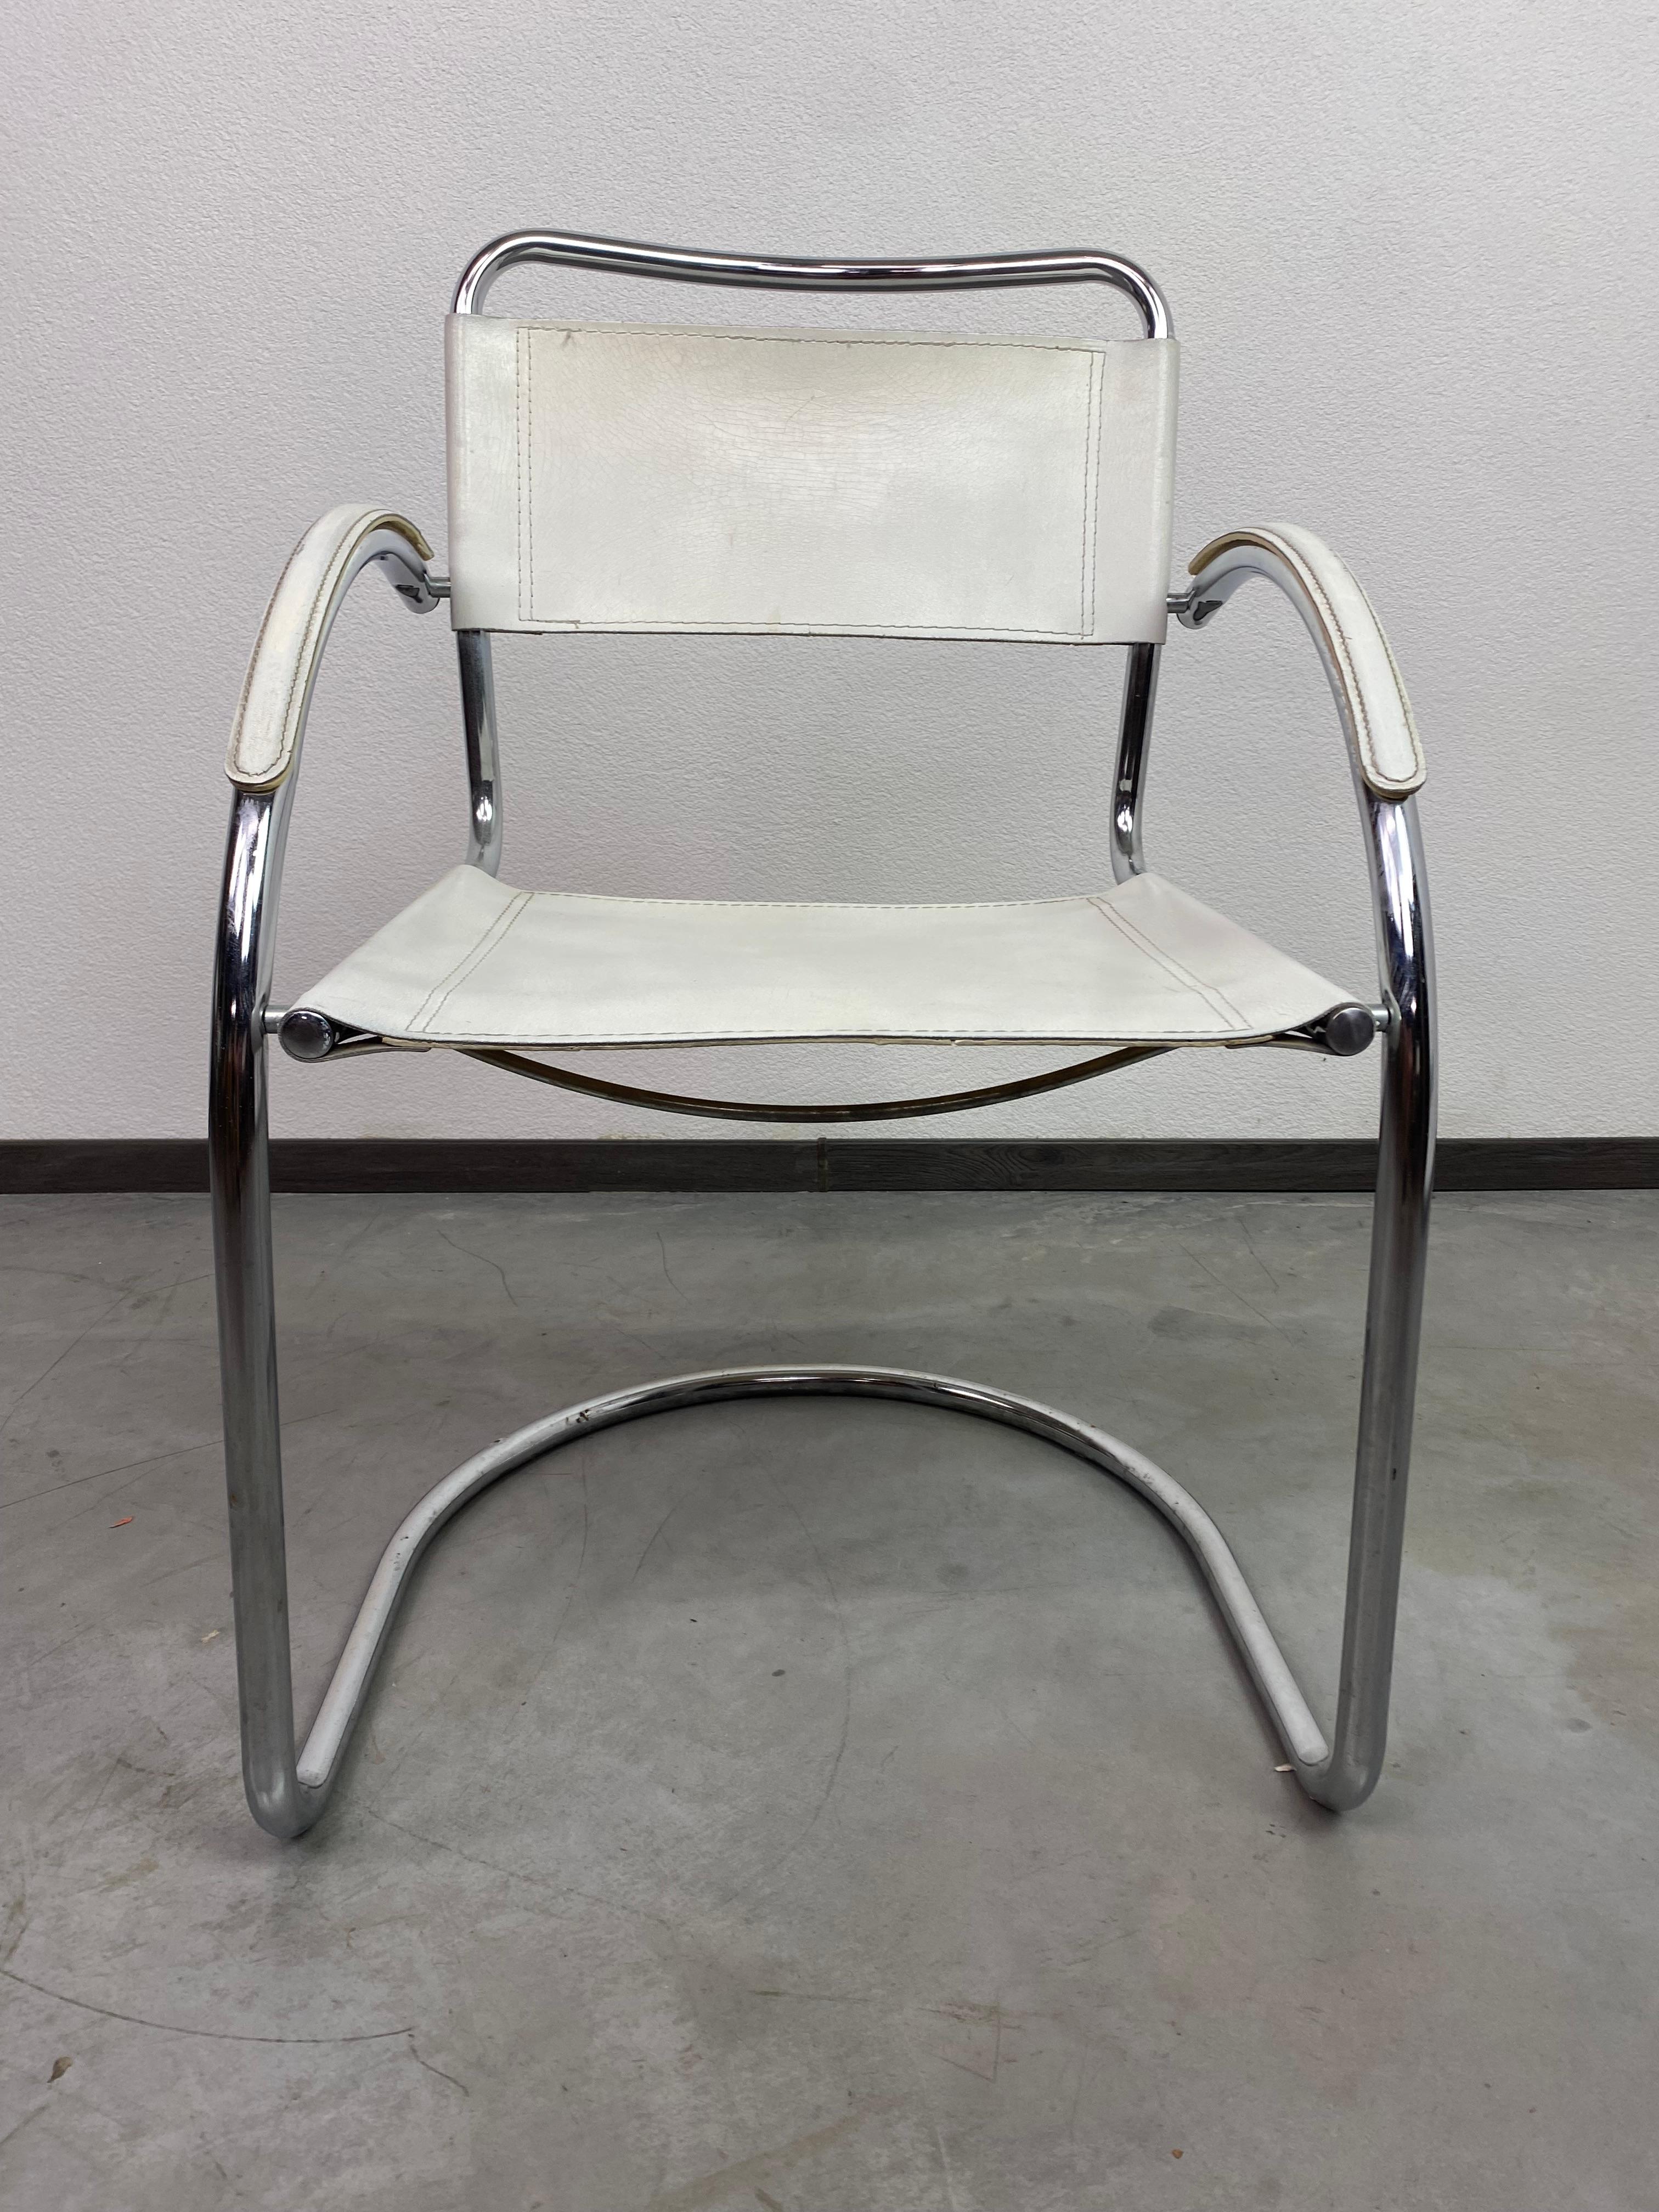 Tubular steel dining chairs In Fair Condition For Sale In Banská Štiavnica, SK